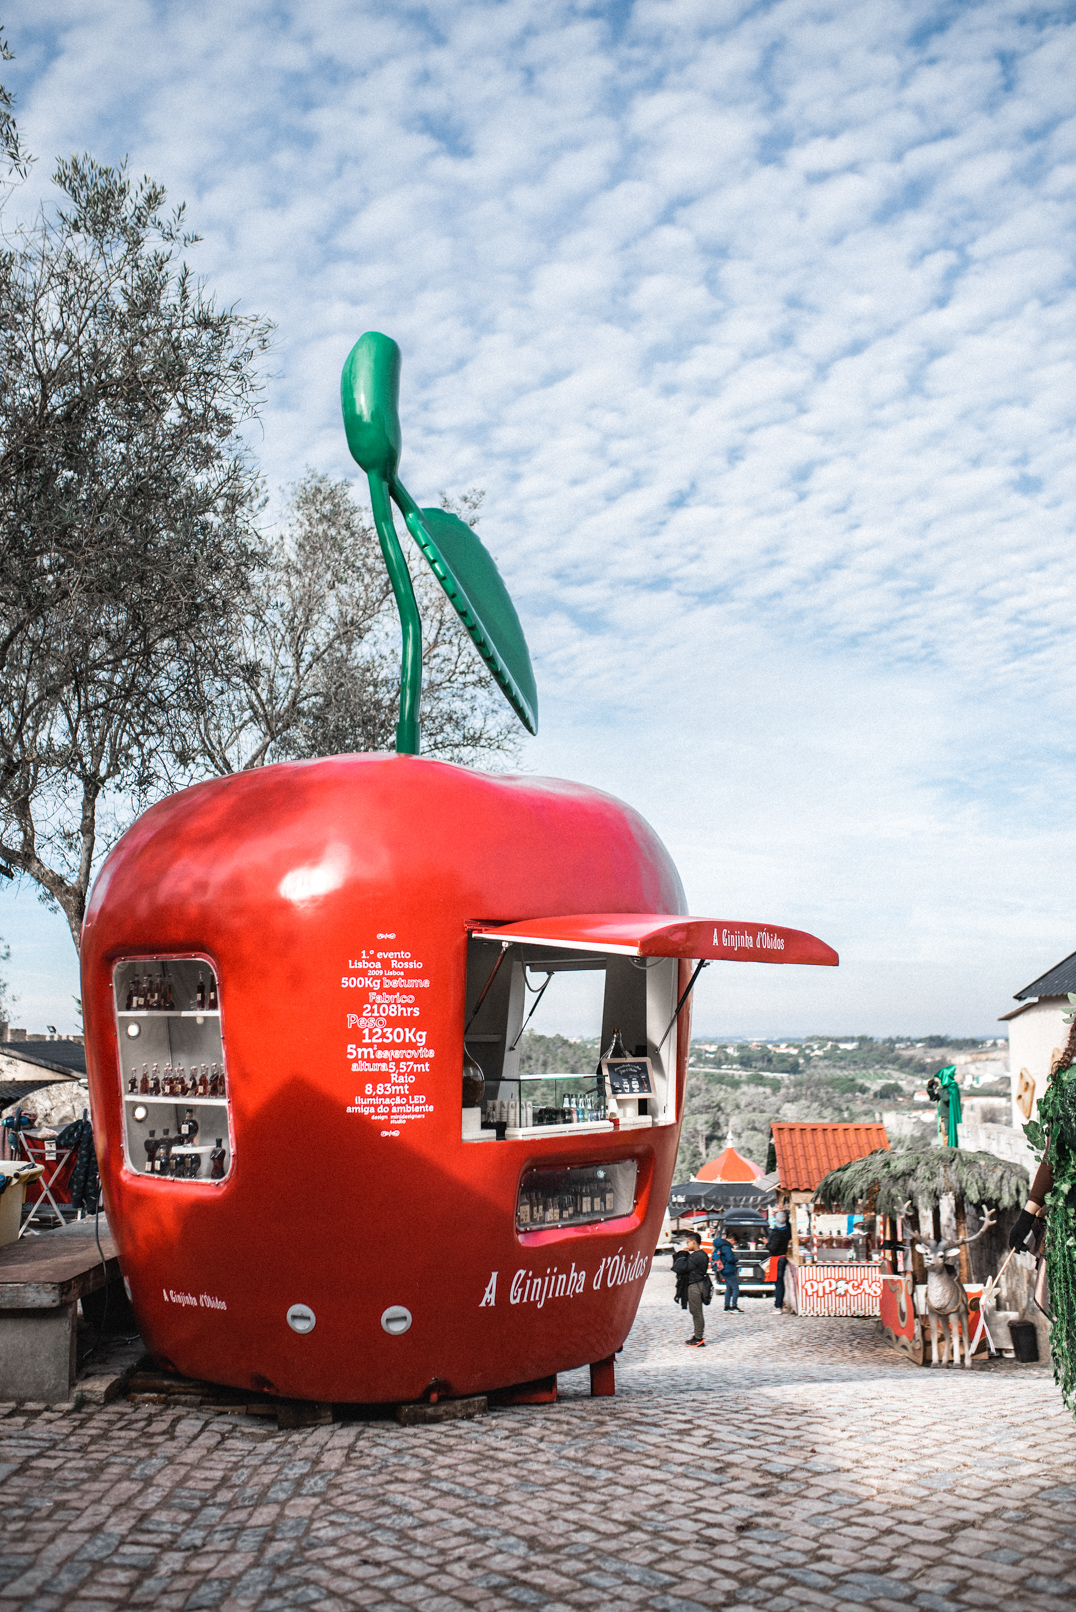 Óbidos Christmas market - Giant Apple Stall